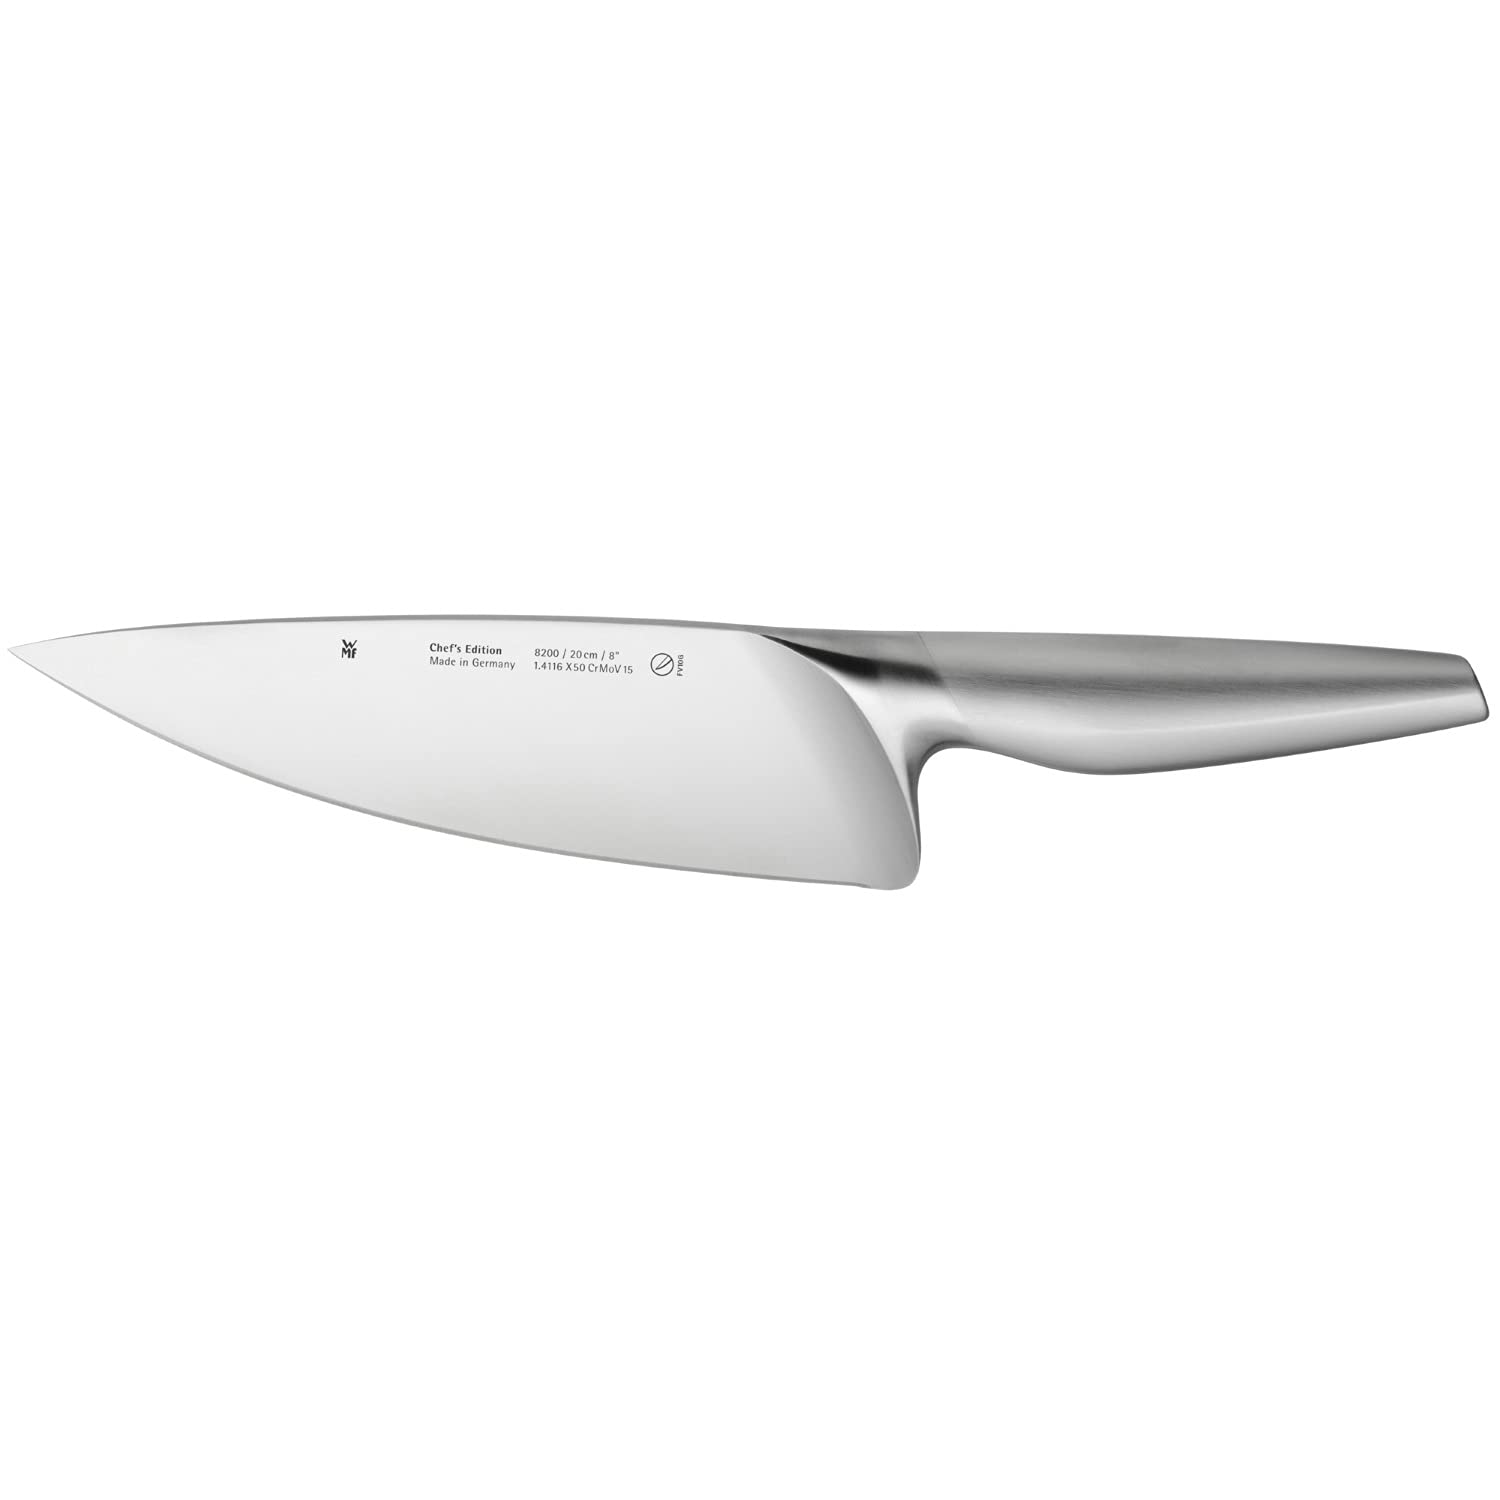 WMF Chef's Edition Kochmesser 32 cm, Made in Germany, Messer geschmiedet, Performance Cut, Spezialklingenstahl, Holzbox, Klinge 20 cm